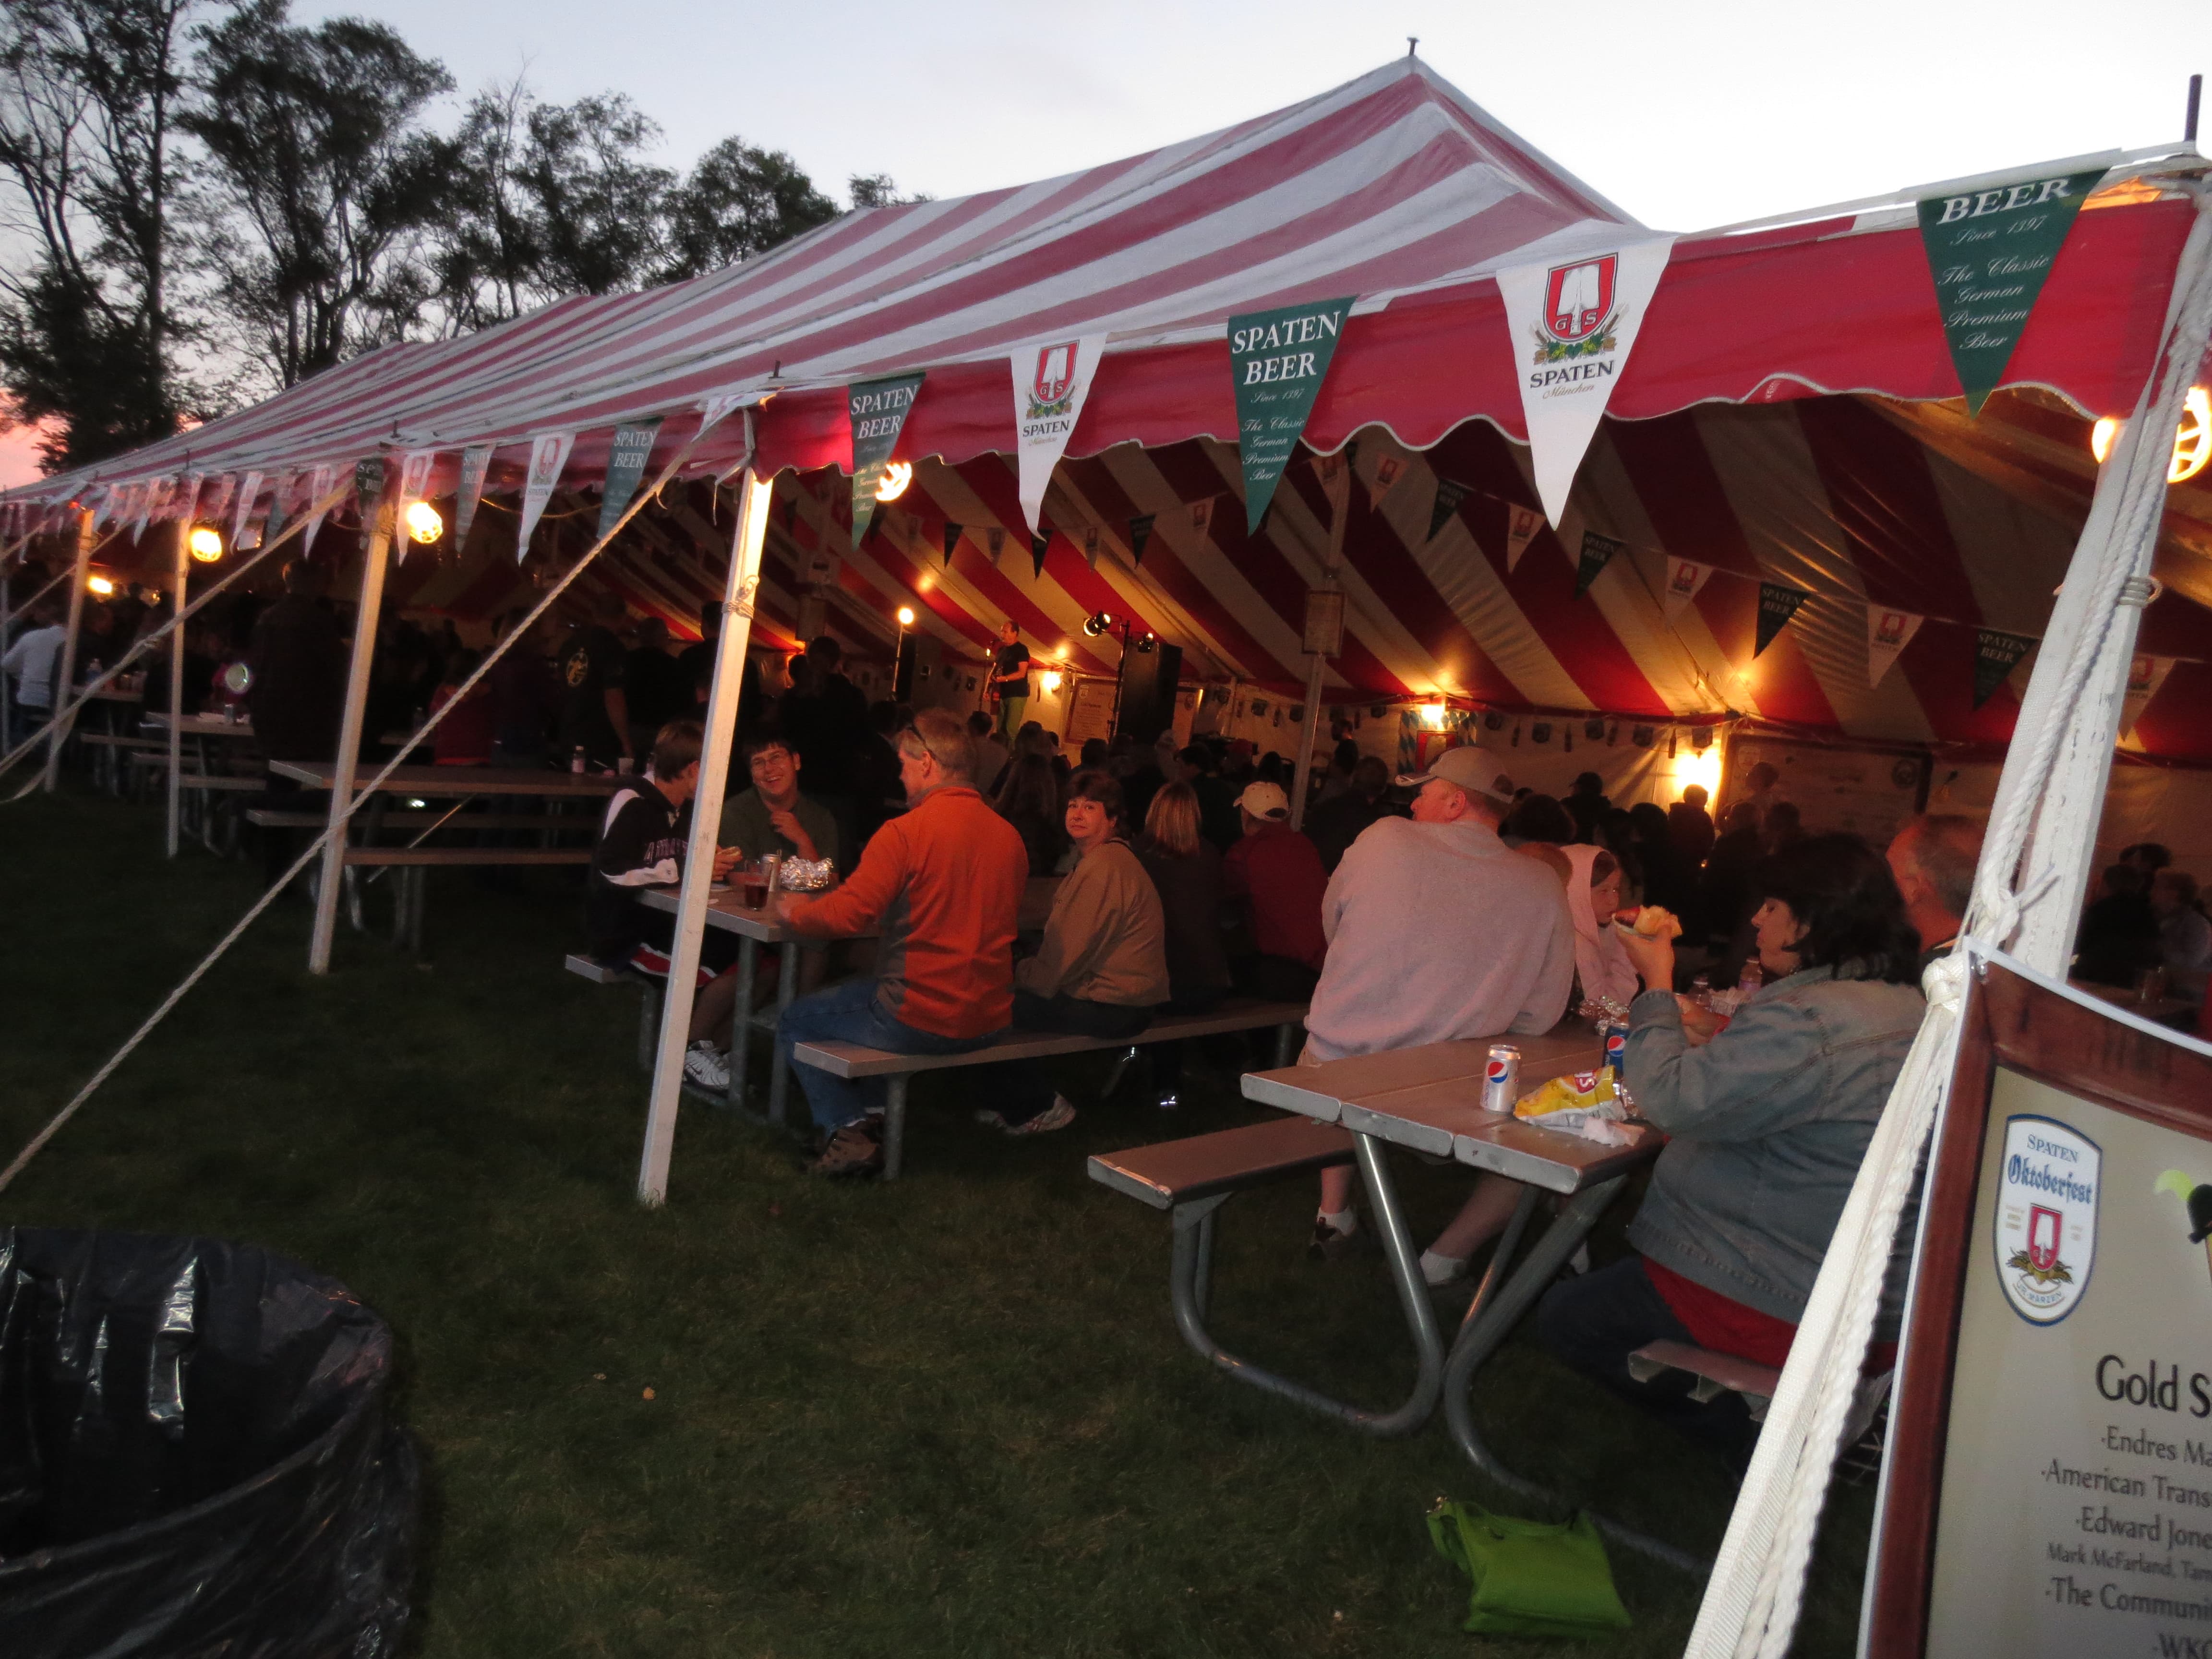 Wauktoberfest Beer Tent